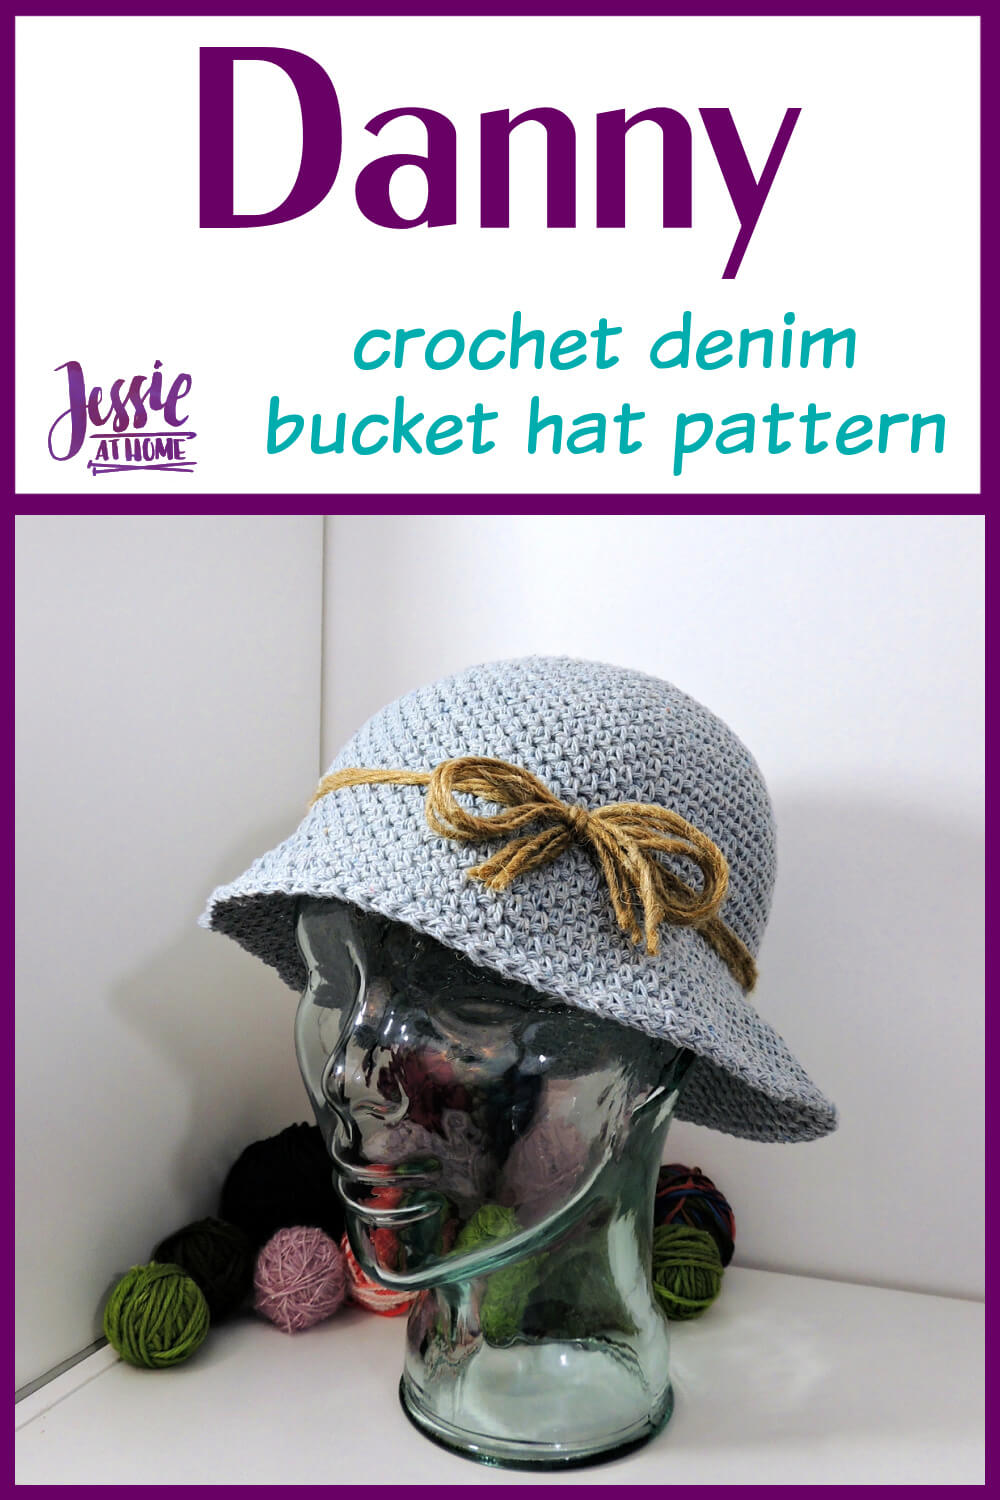 side view of a crochet denim-look hat with text "Danny, crochet denim bucket hat pattern"